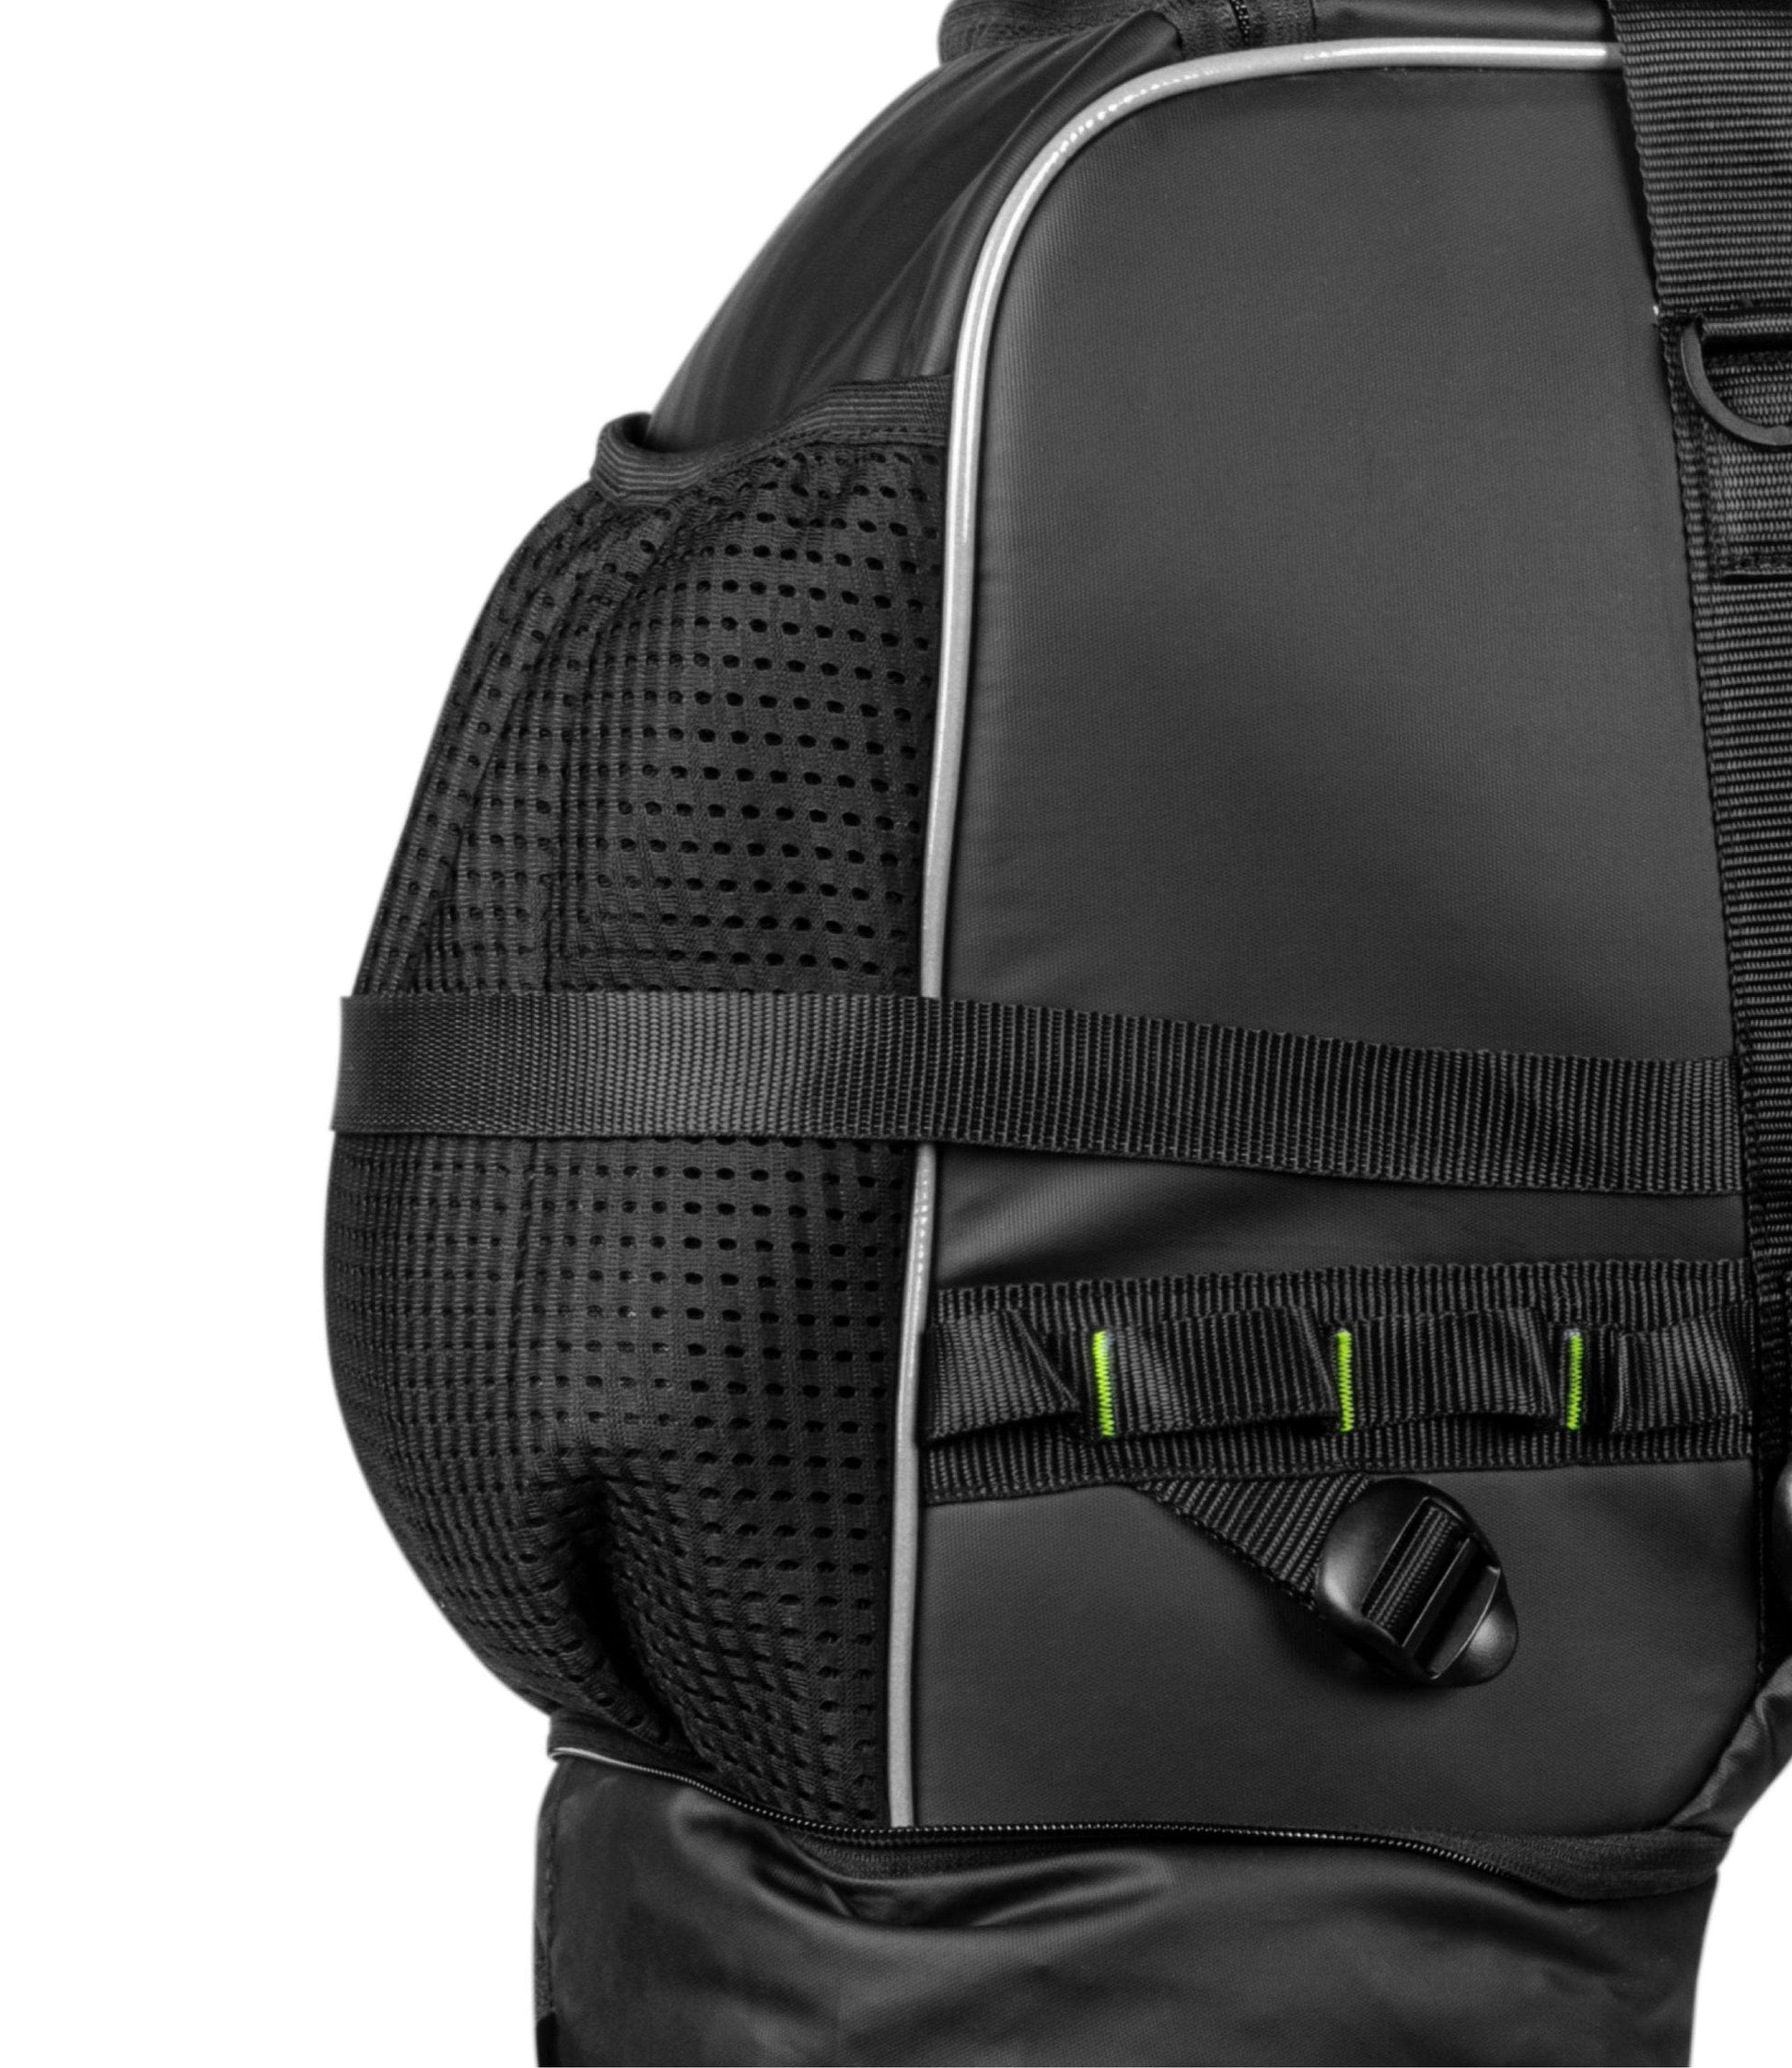 Rynox Grab Hybrid Tailbag Stormproof - Destination Moto